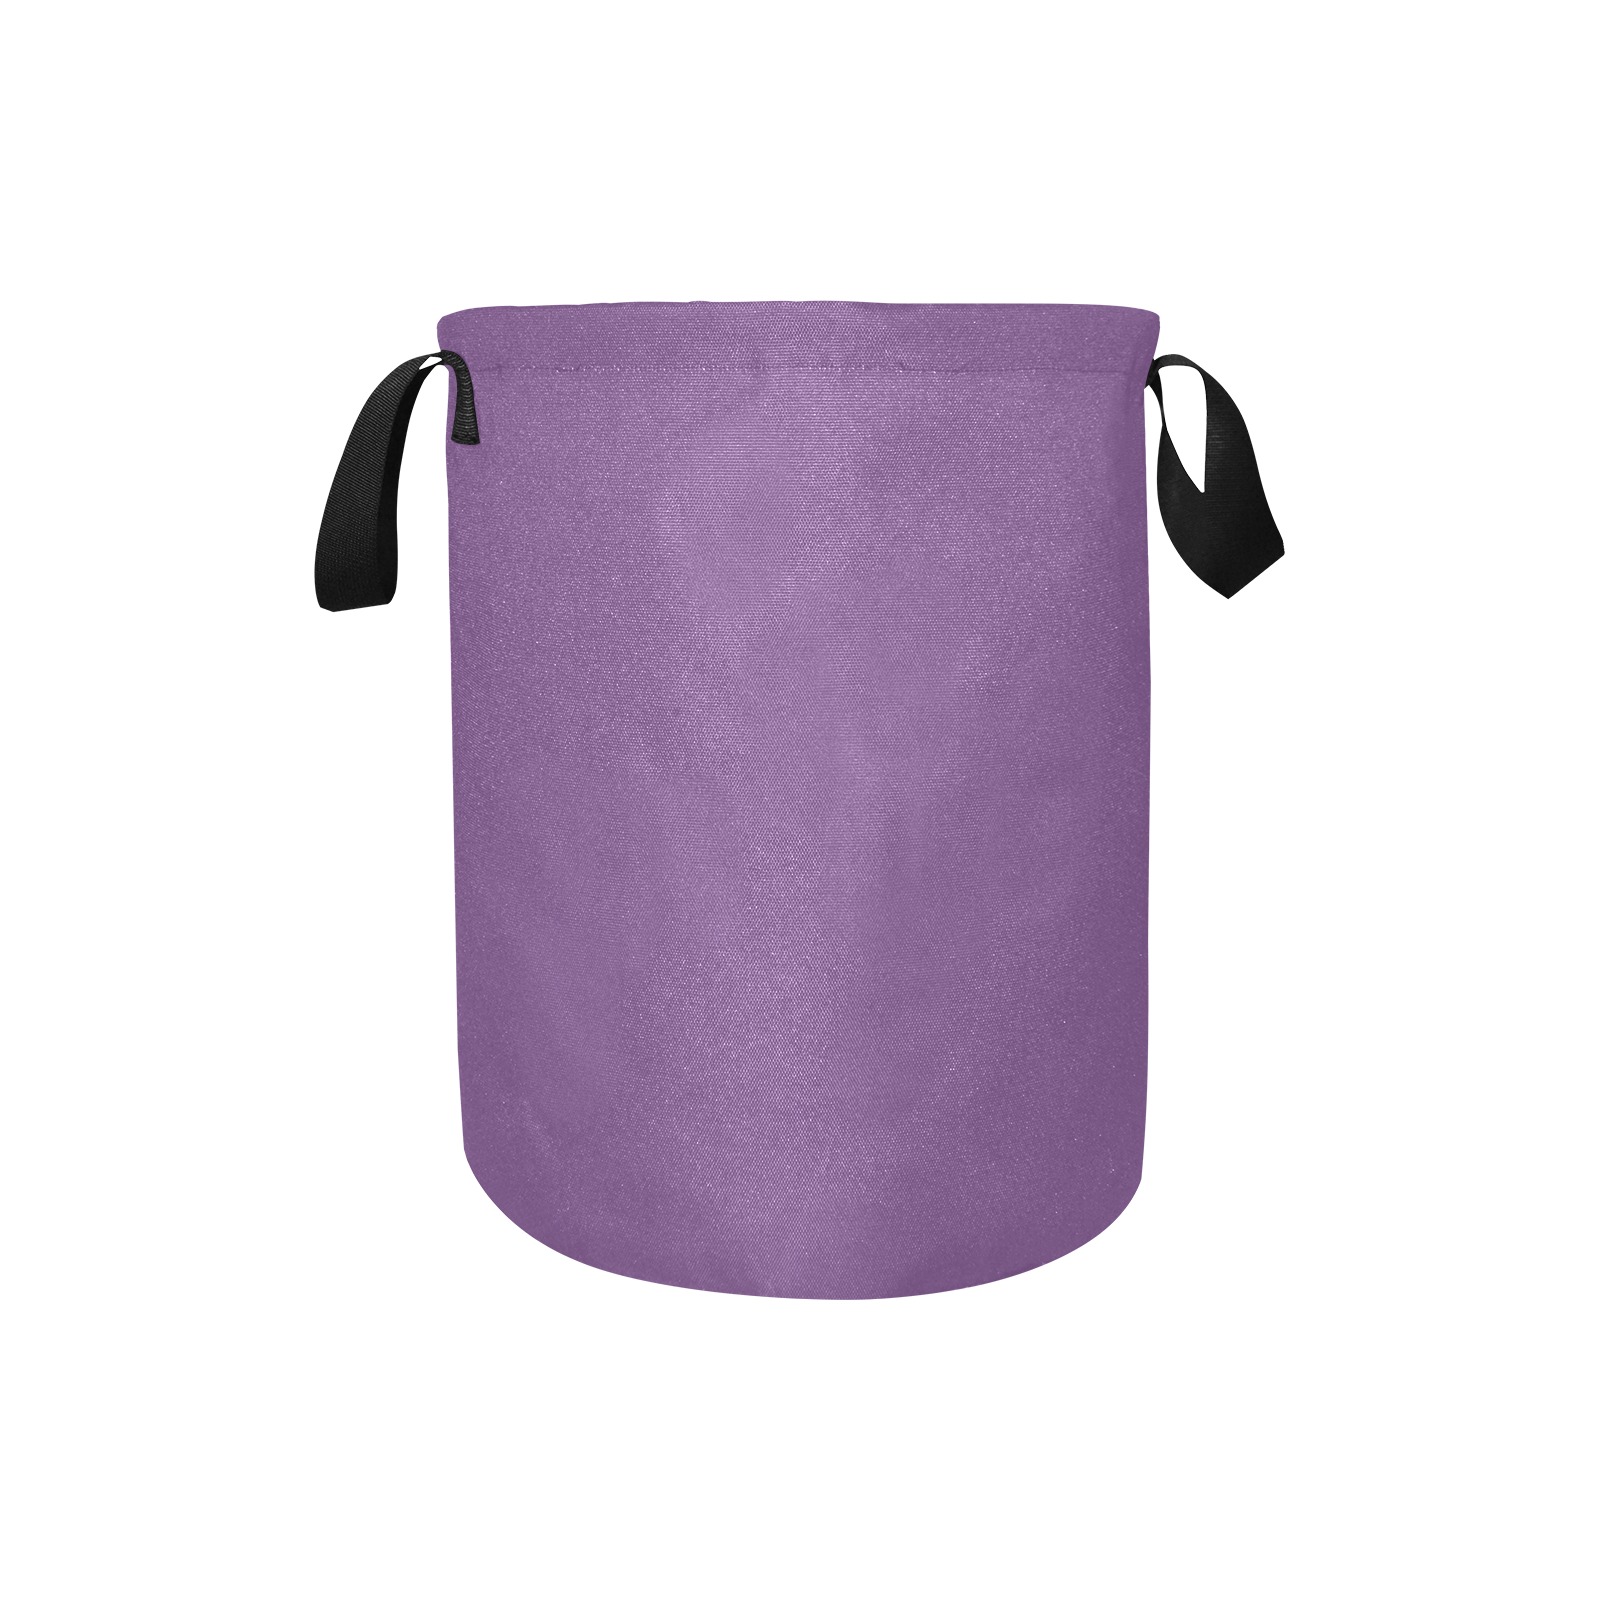 color purple 3515U Laundry Bag (Small)